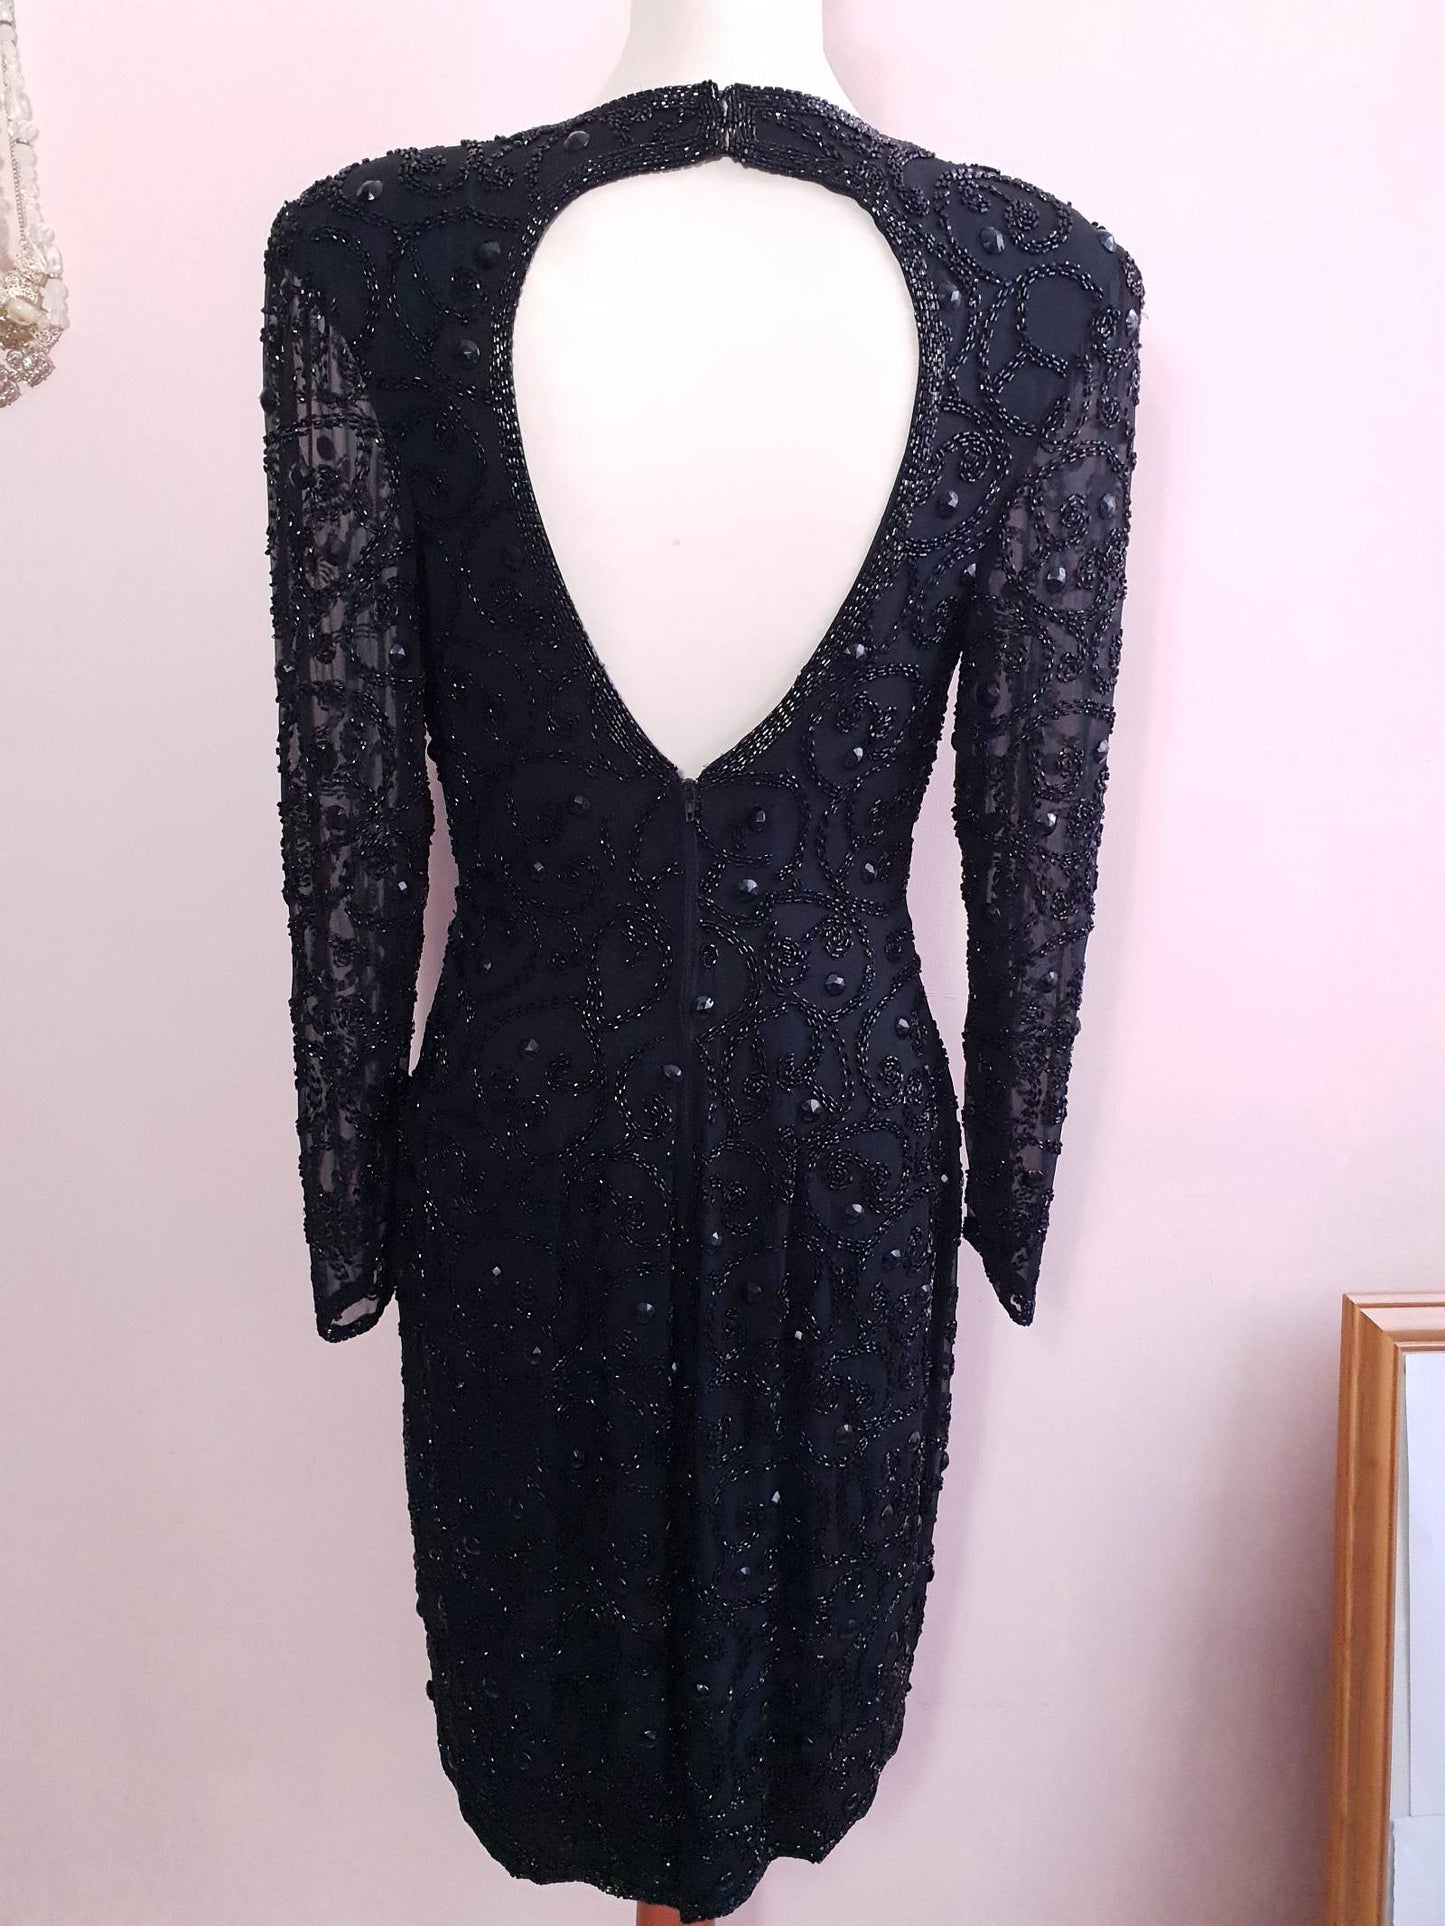 Vintage 1980s Beaded Black Dress - Size 10